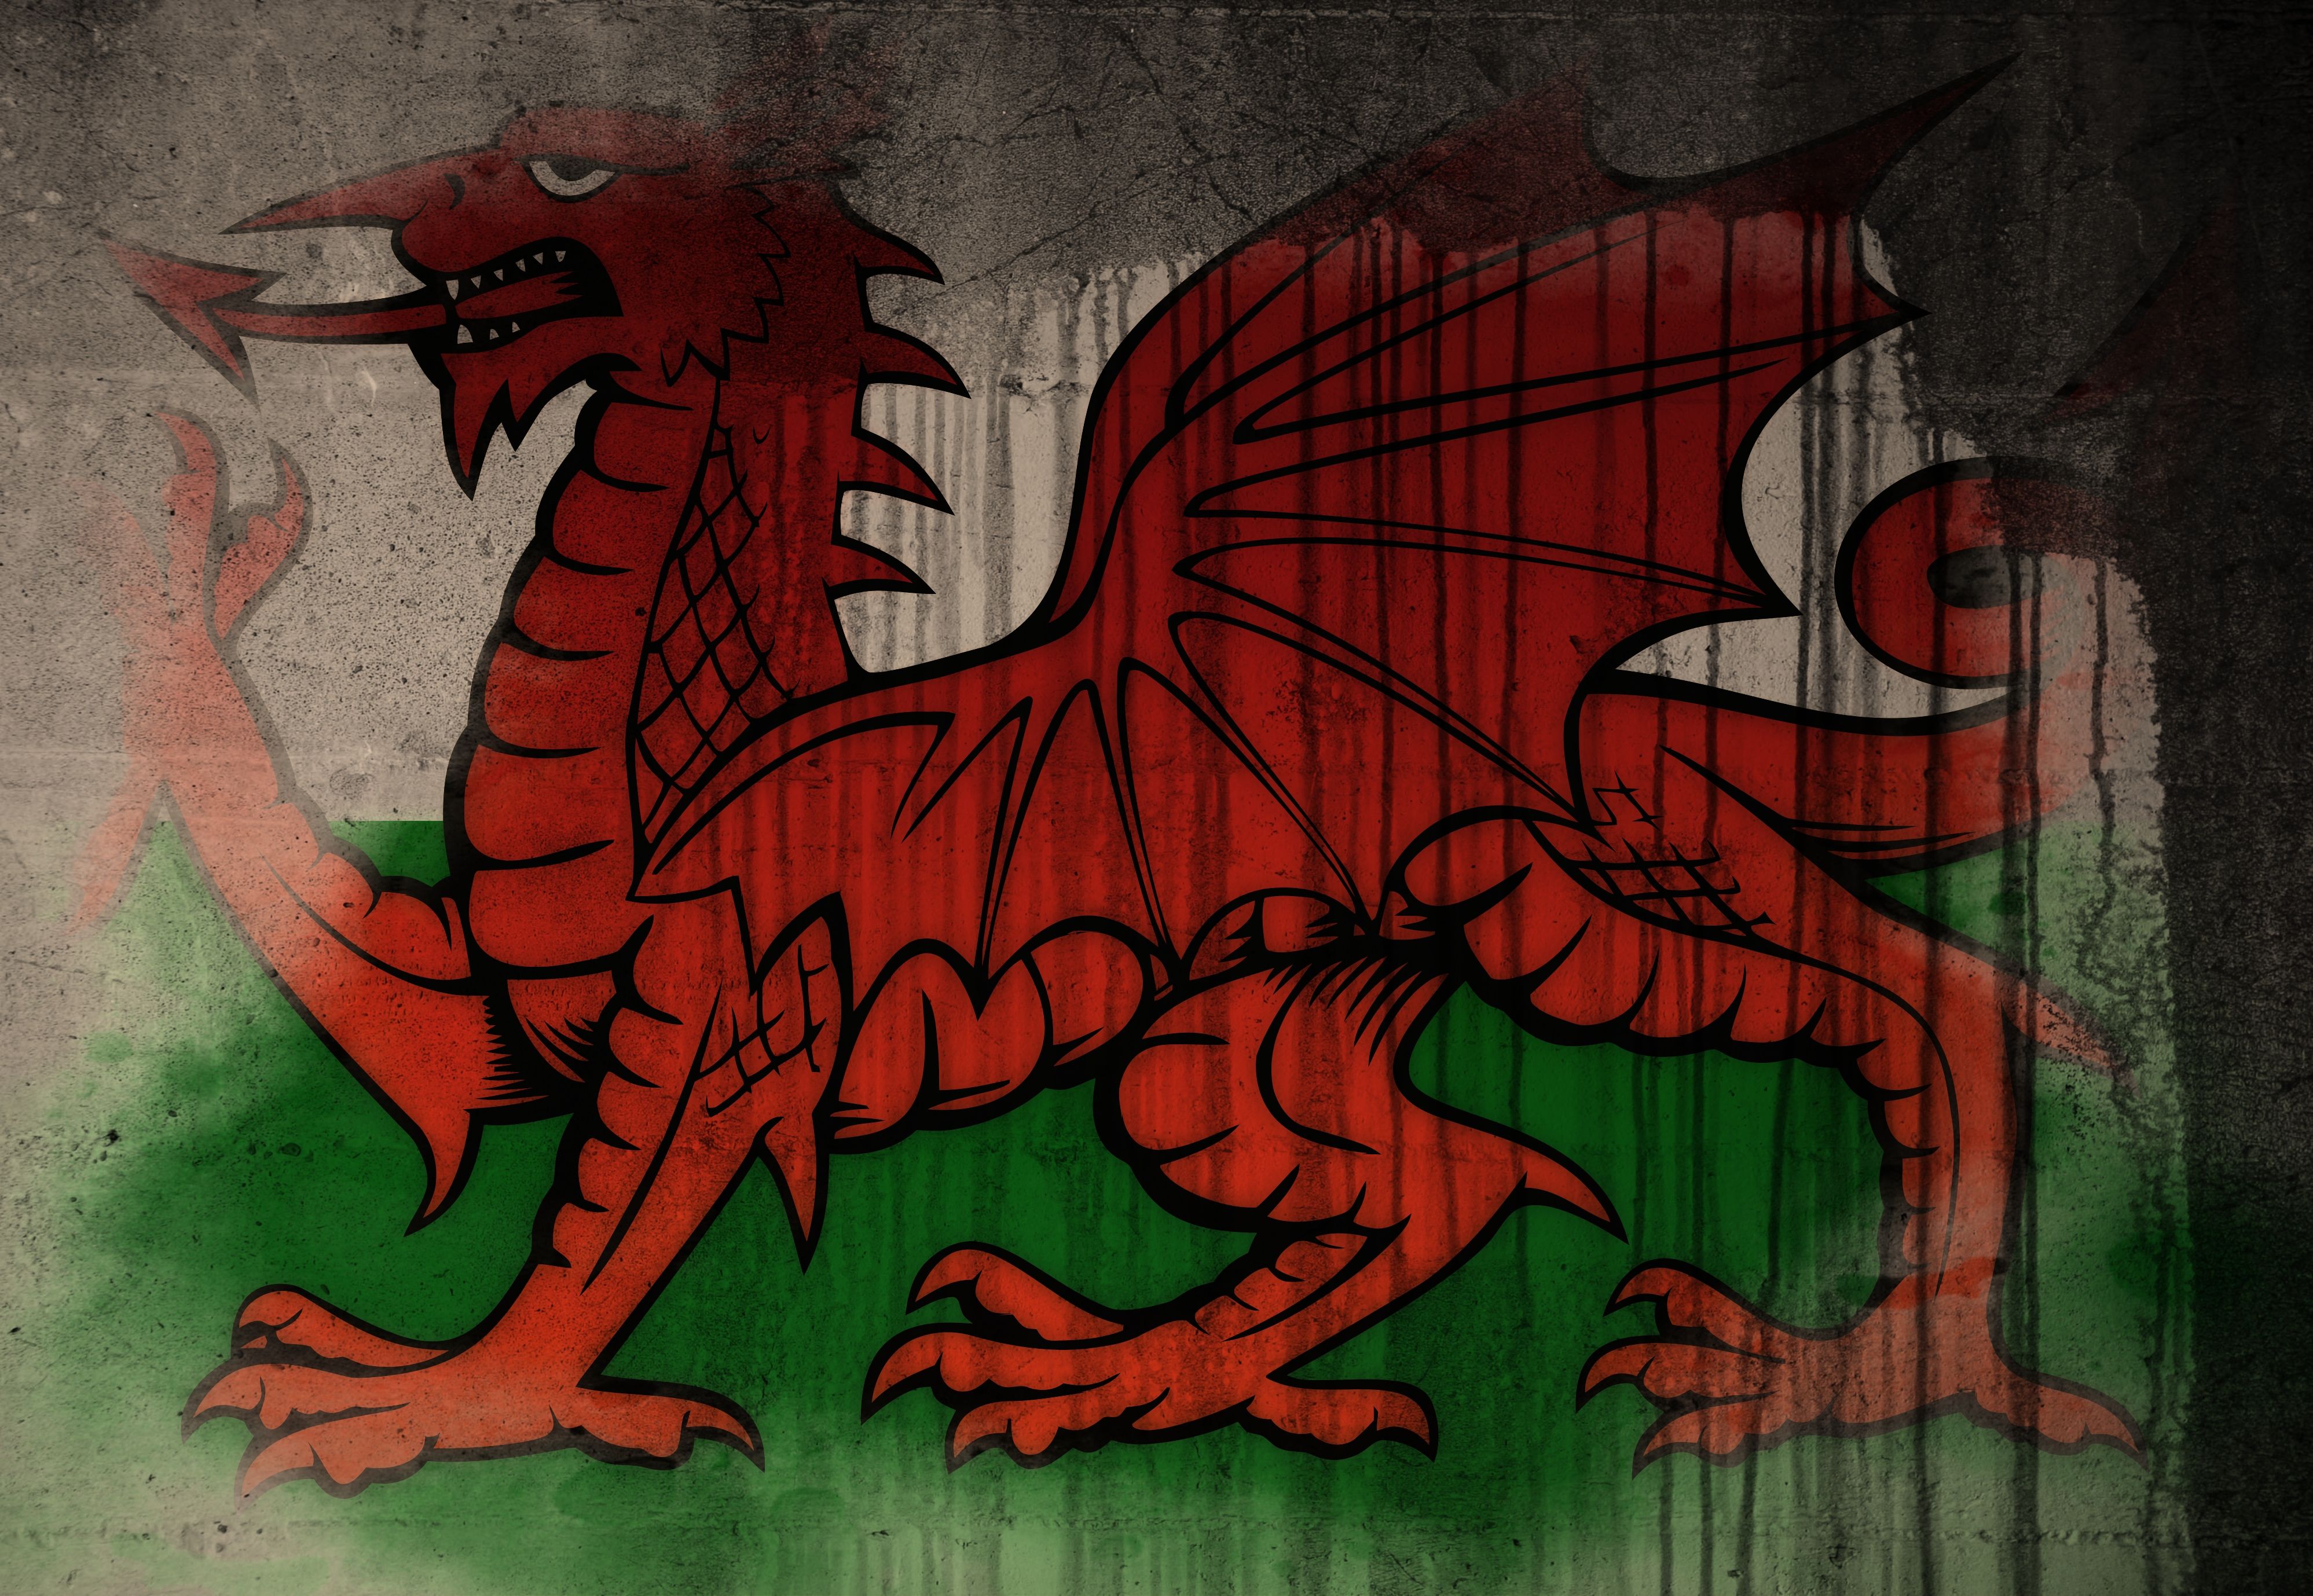 پرچم ولز (Flag of Wales)